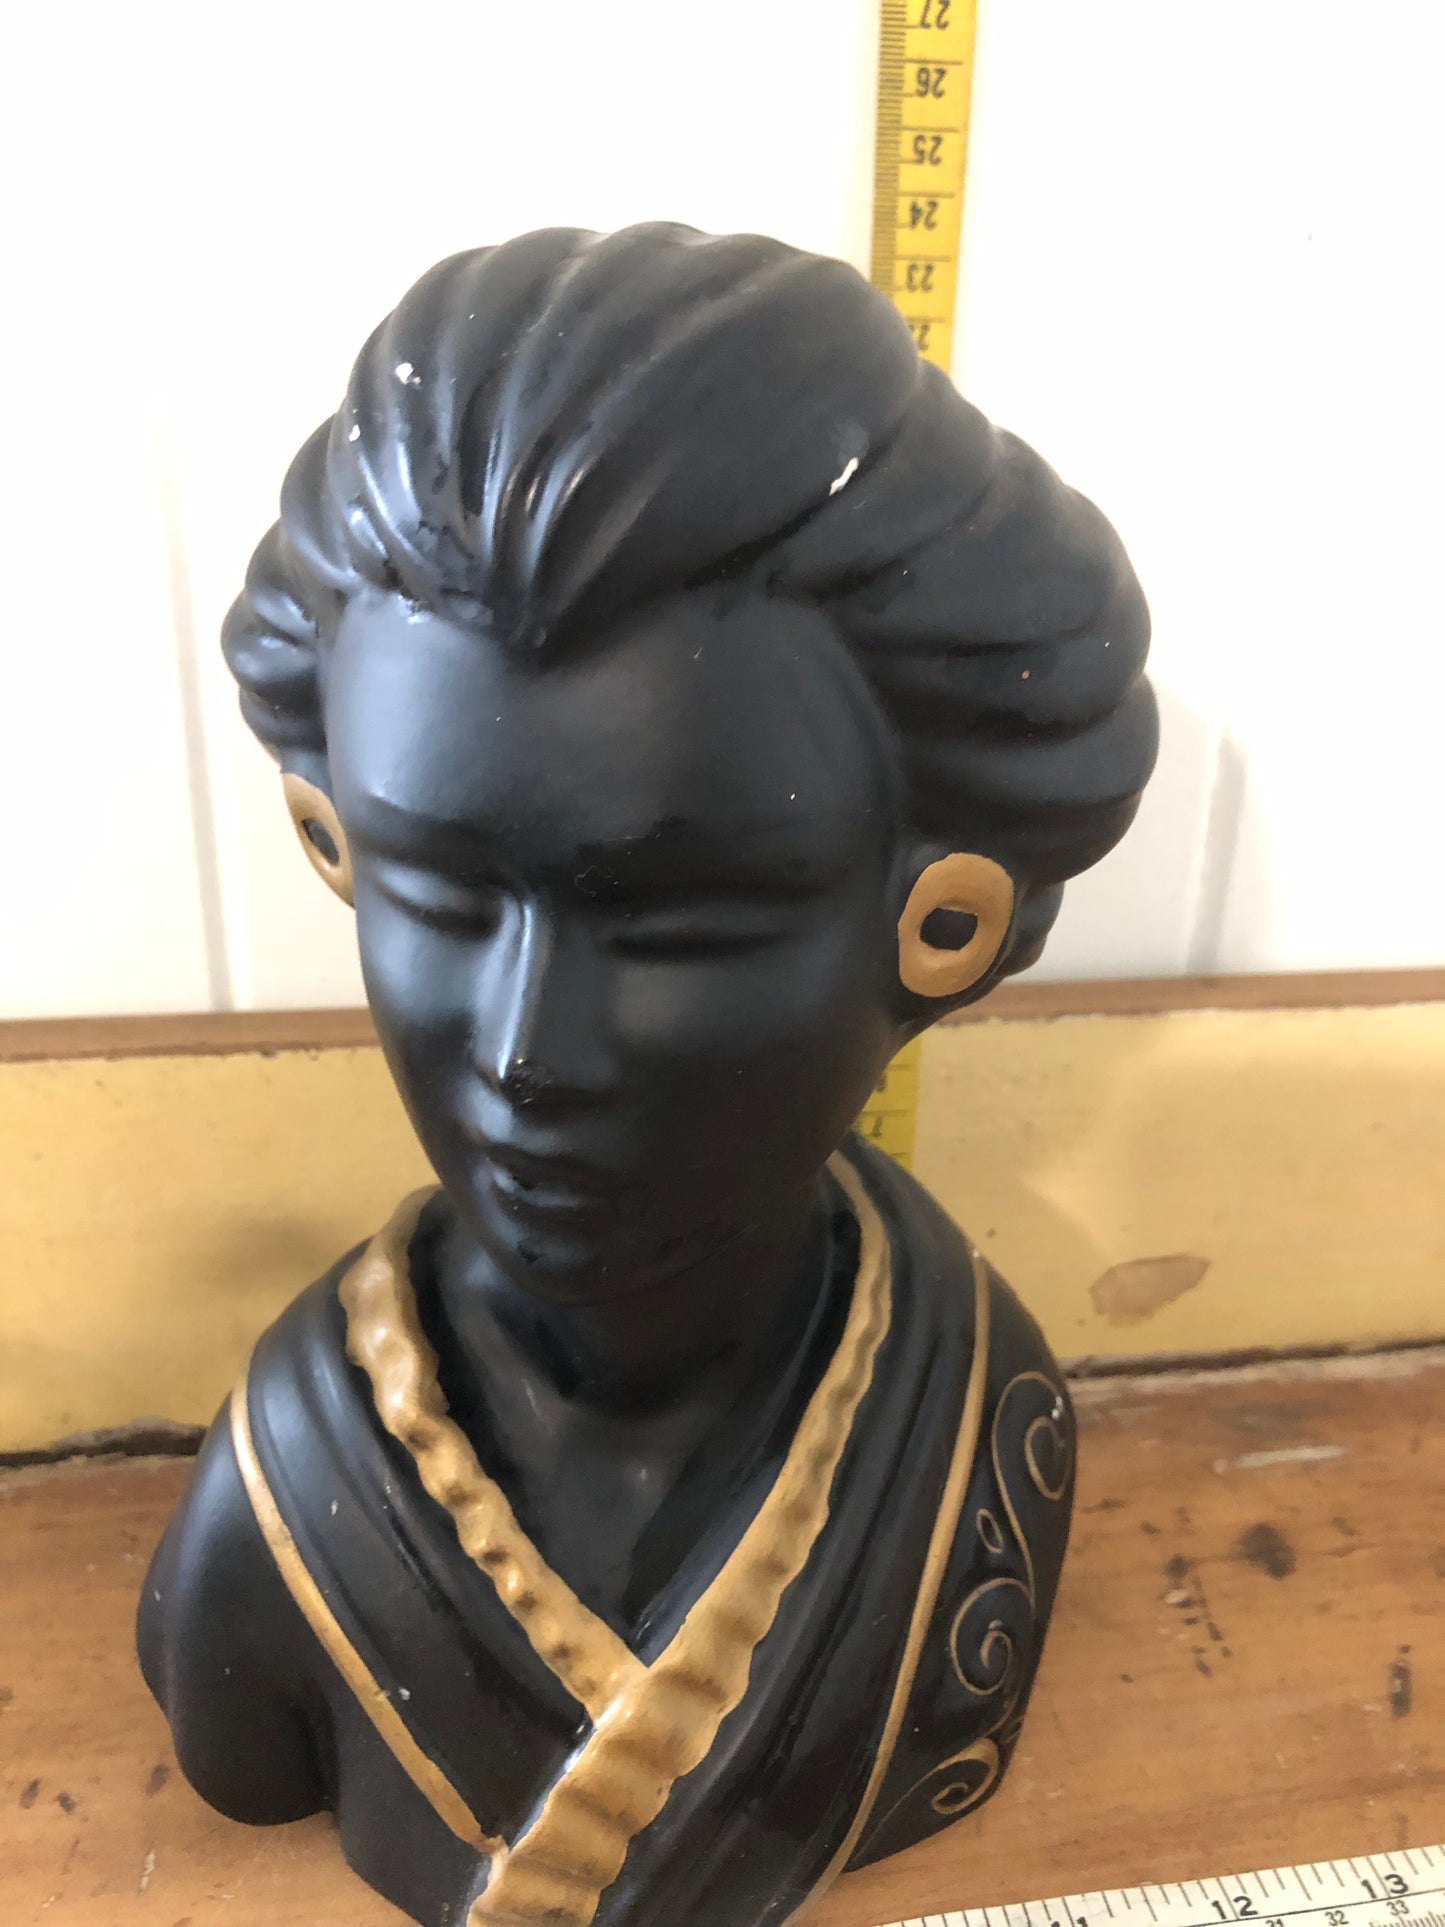 Italian made Asian head figurine. Black